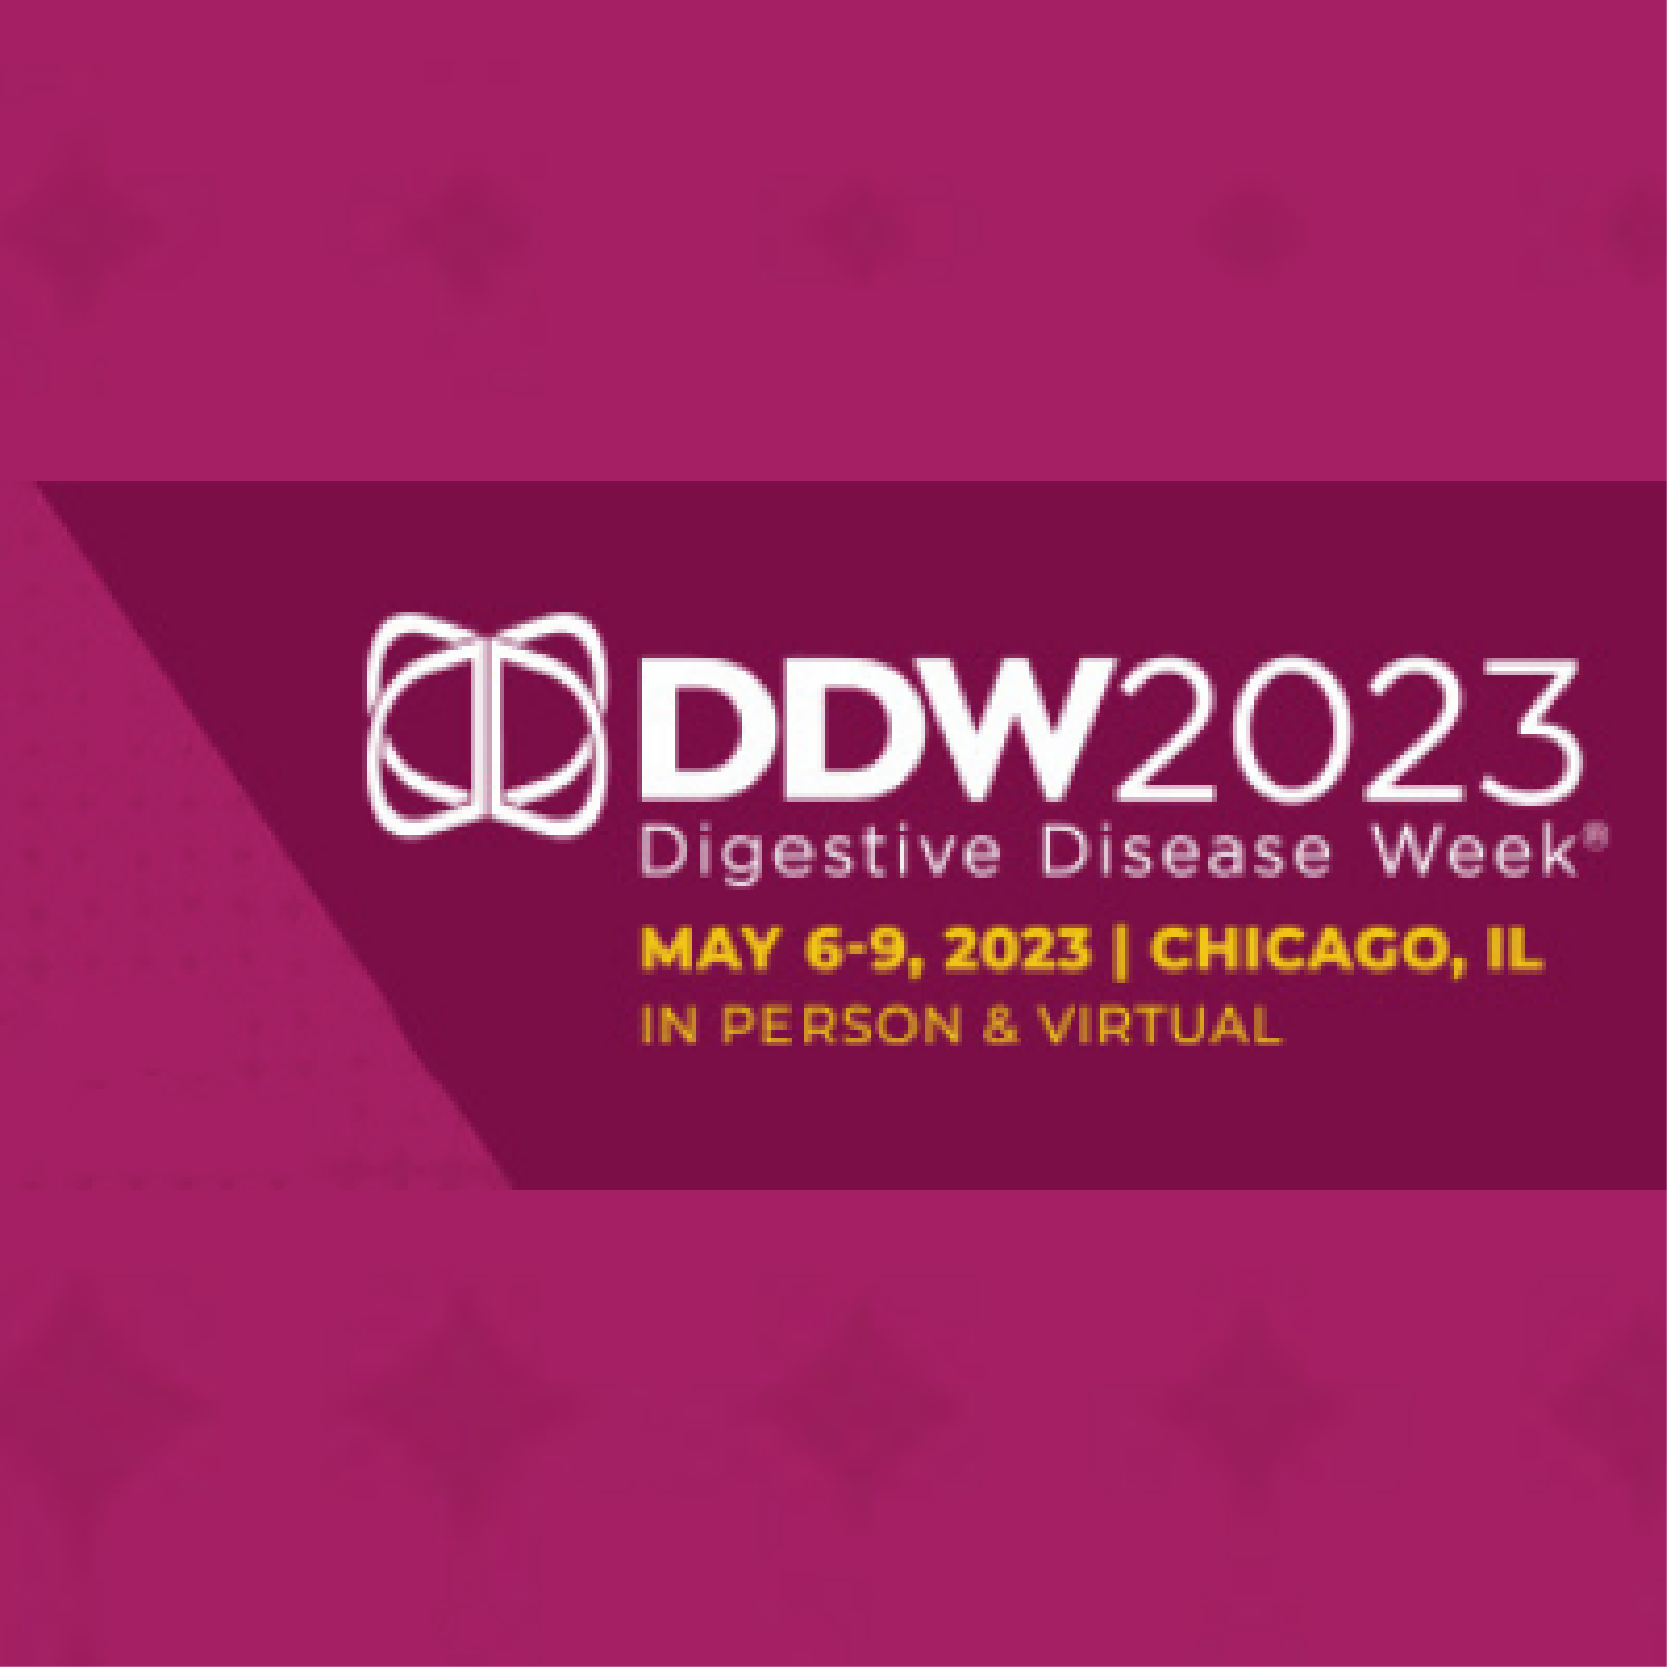 Digestive Disease Week - DDW 2023